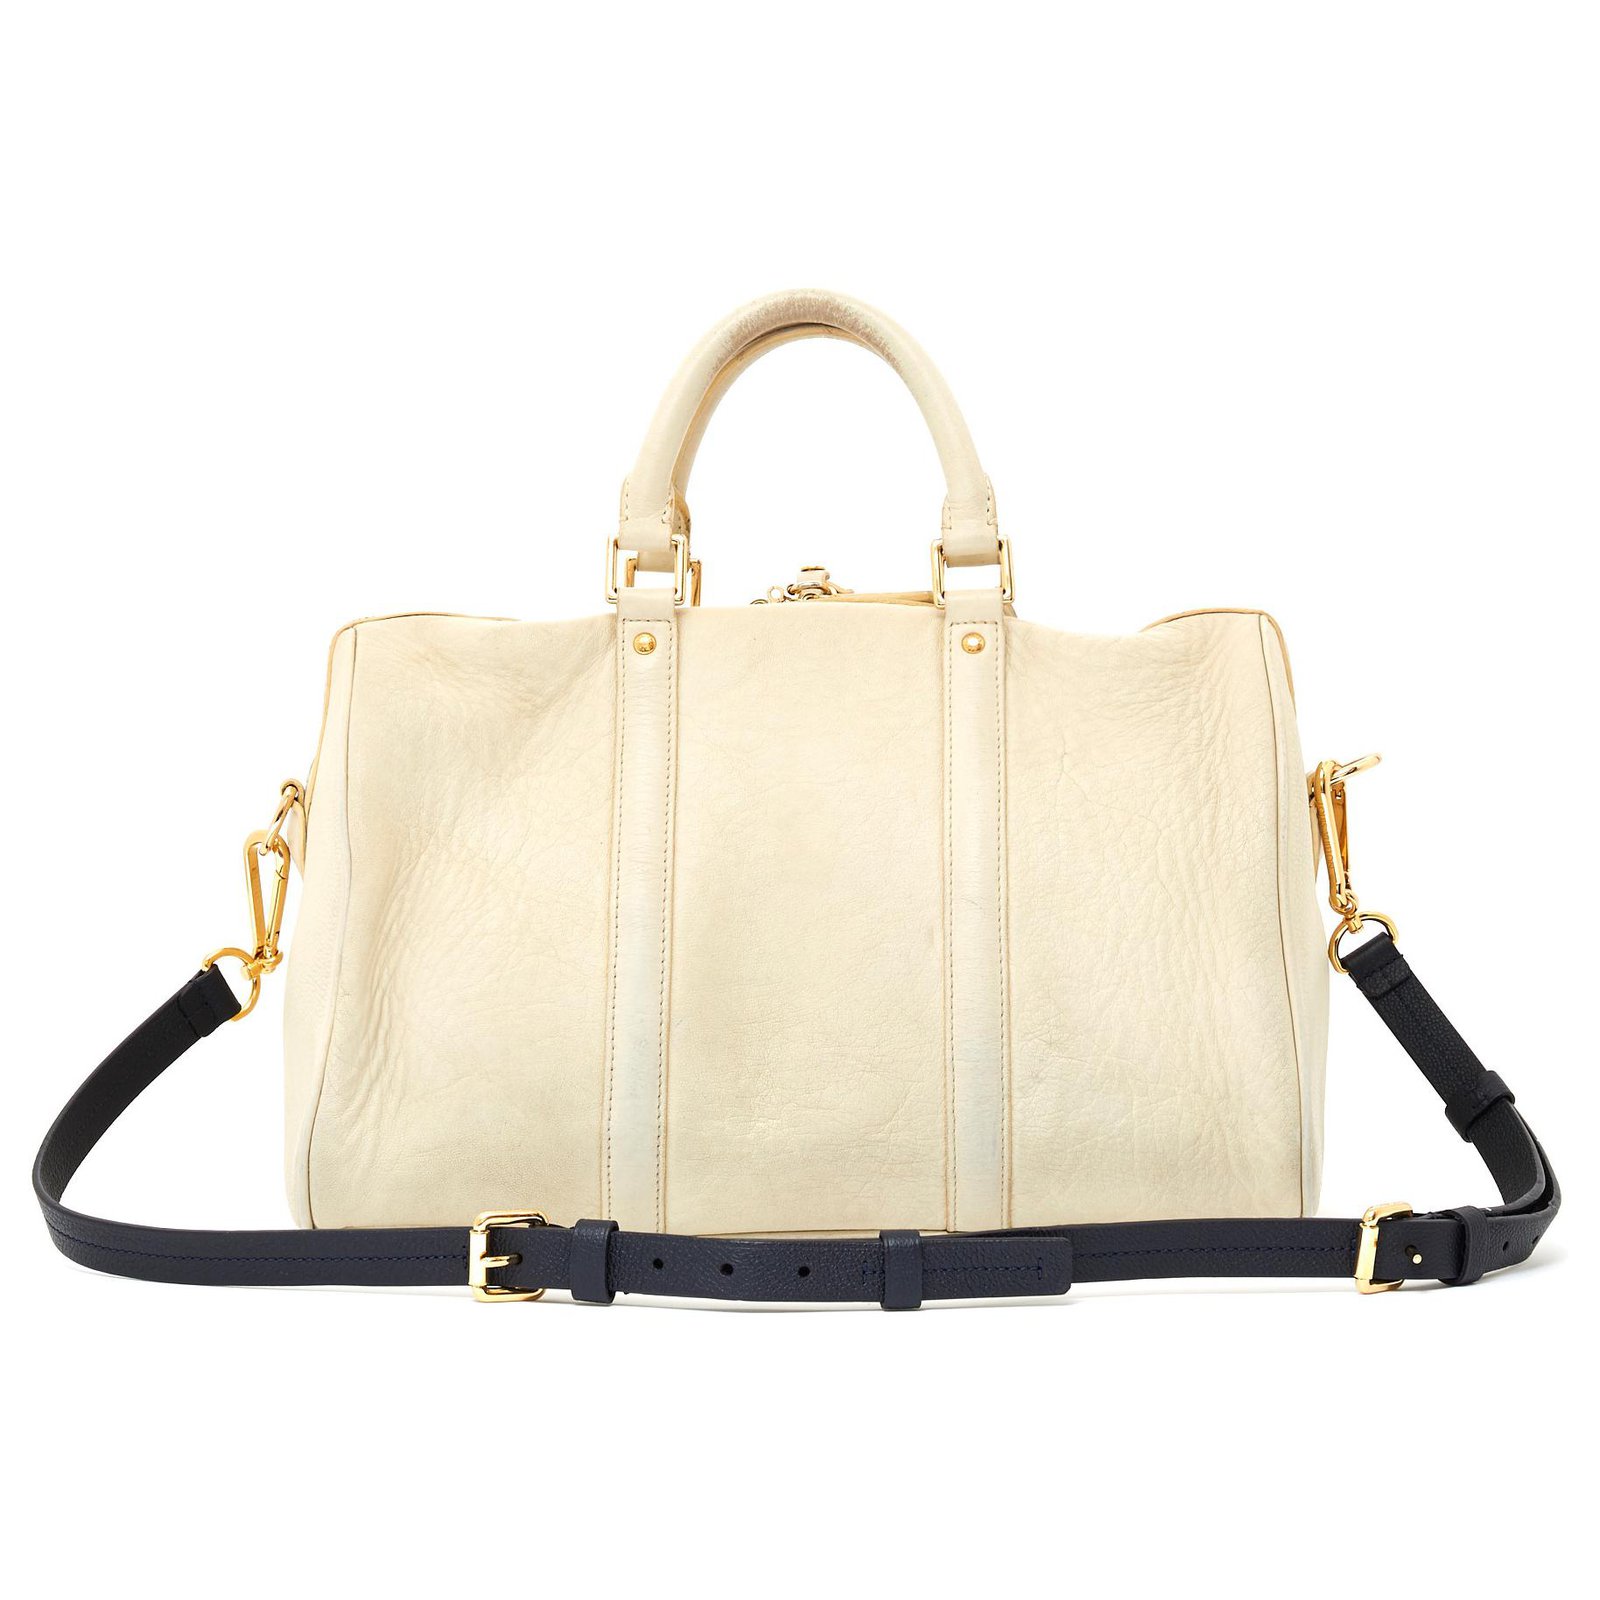 Louis Vuitton SPEEDY STRAP 35 Sofia Coppola Handbags Leather,Metal Golden,Cream,Navy blue ref ...